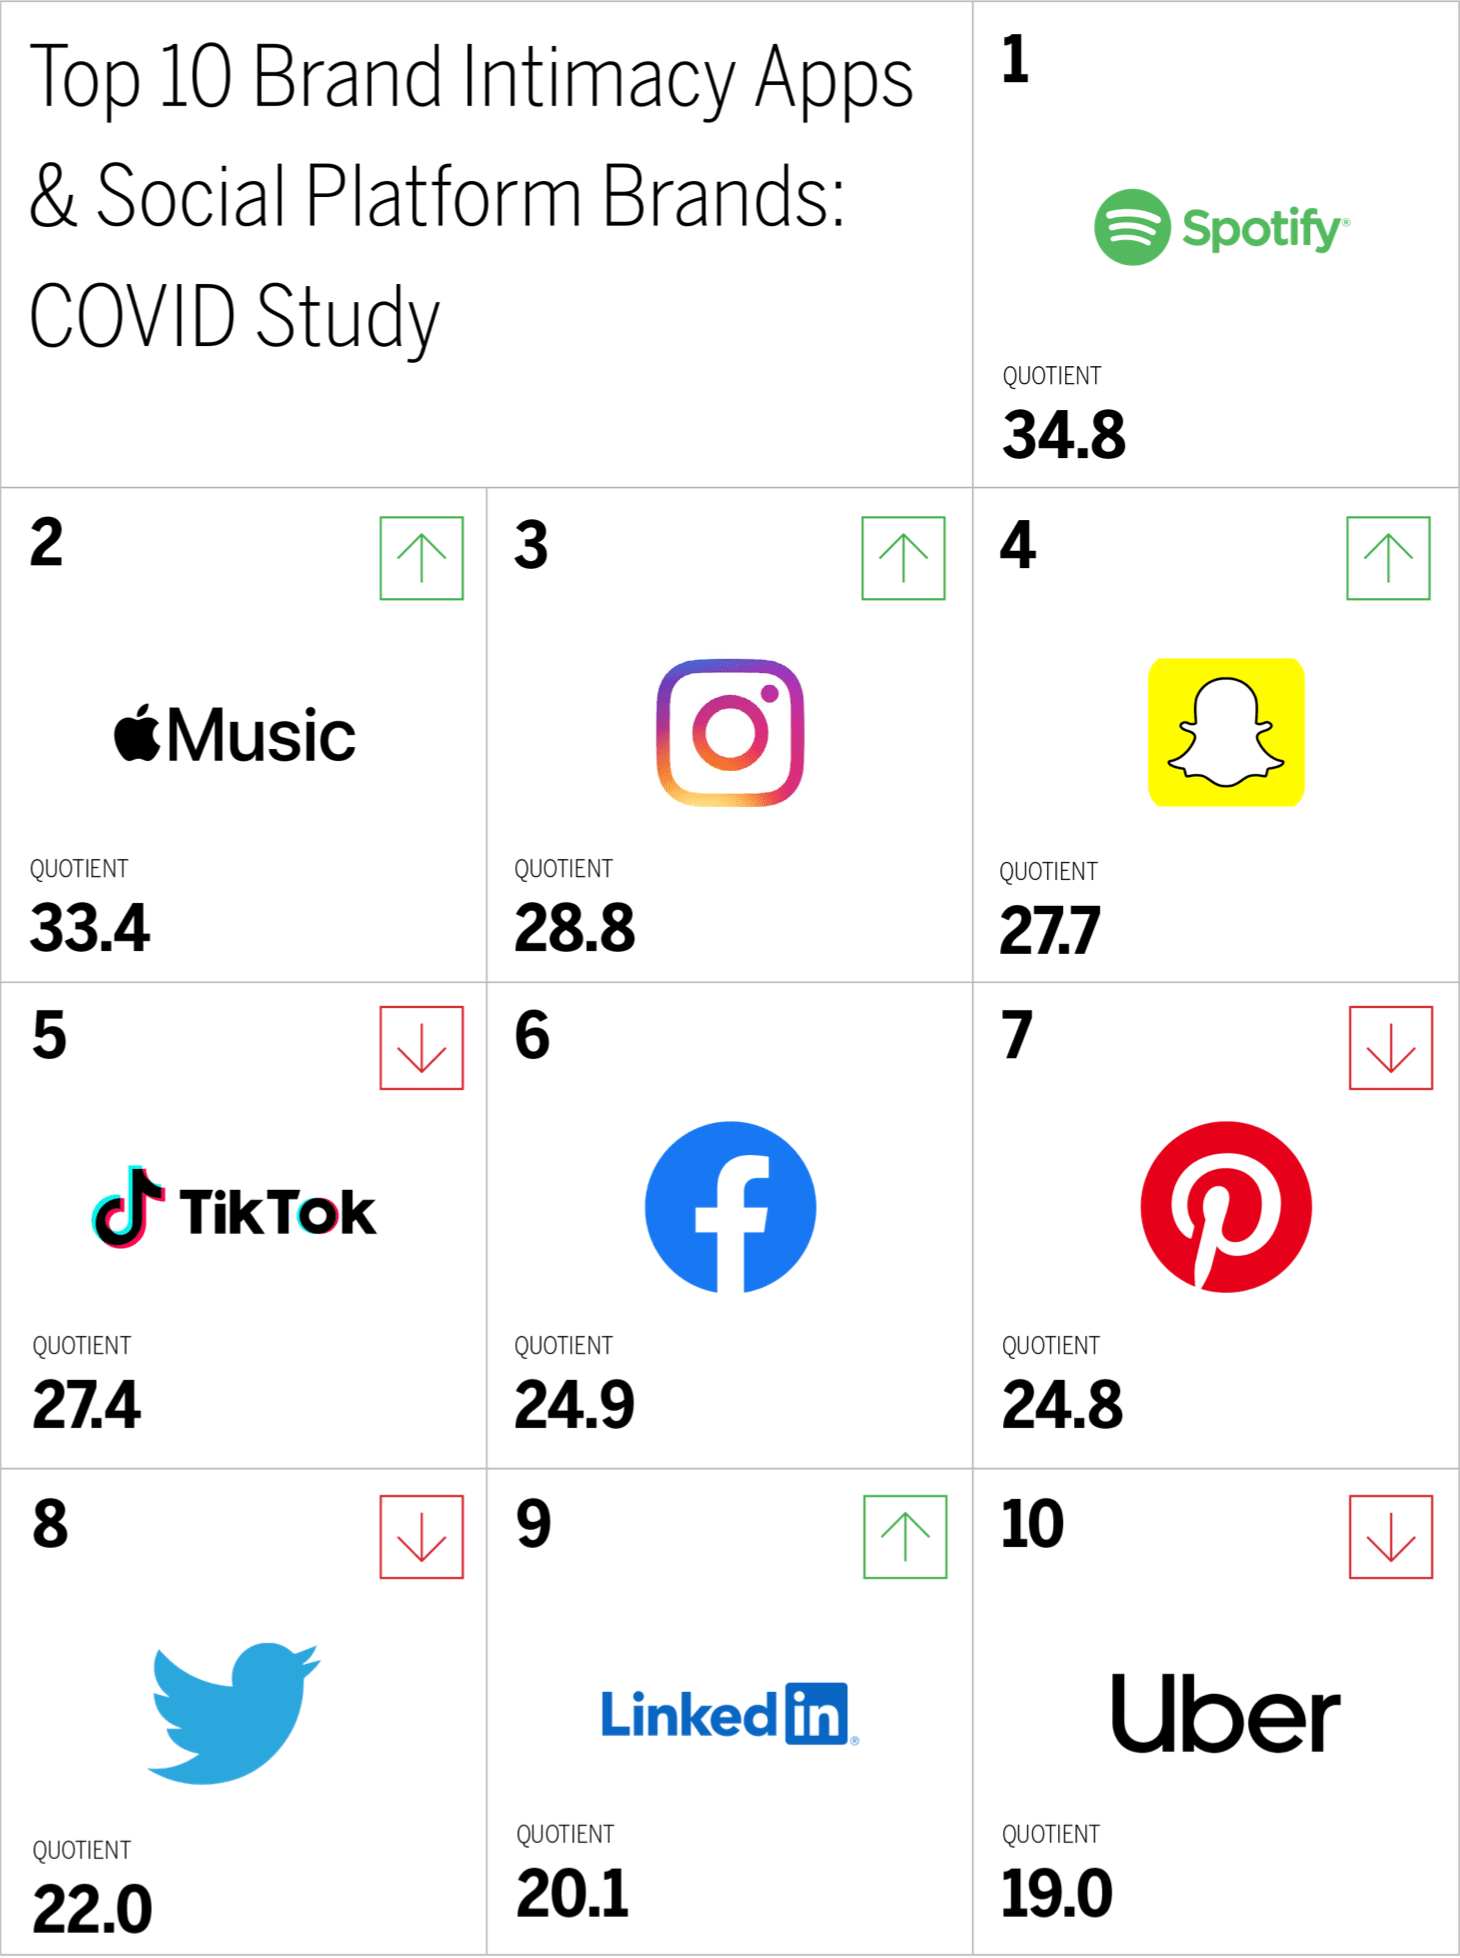 Top 10 Brand Intimacy Apps
& Social Platform Brands:
COVID Study chart